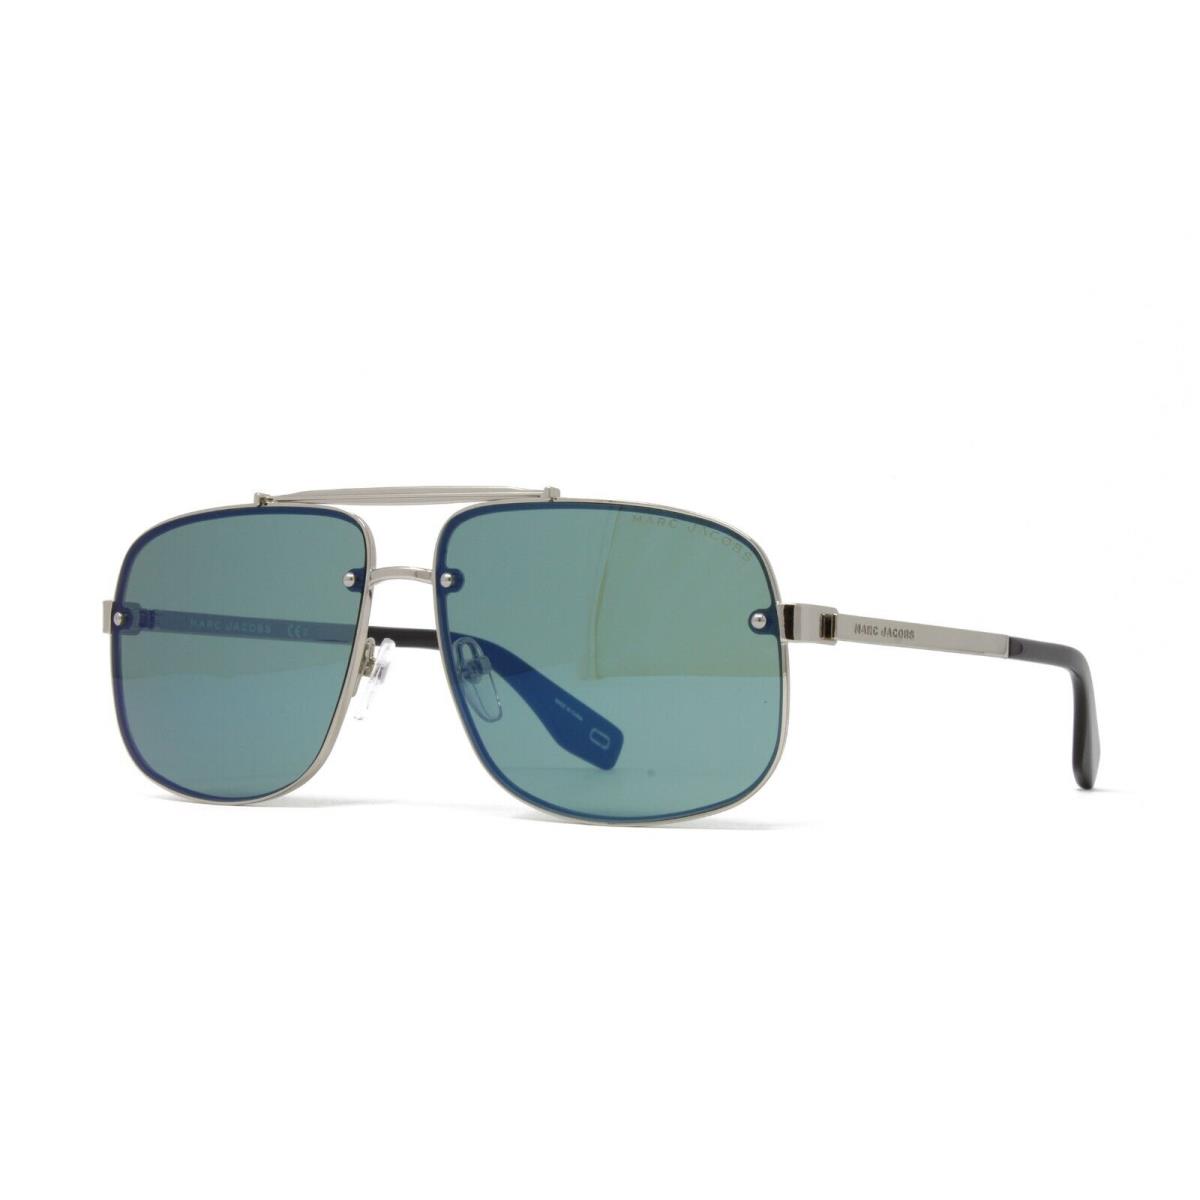 Marc Jacobs Square Men`s Sunglasses 318S 3YG Silver 61mm Green Blue Mirror Lens - Frame: Silver, Lens: Green Blue